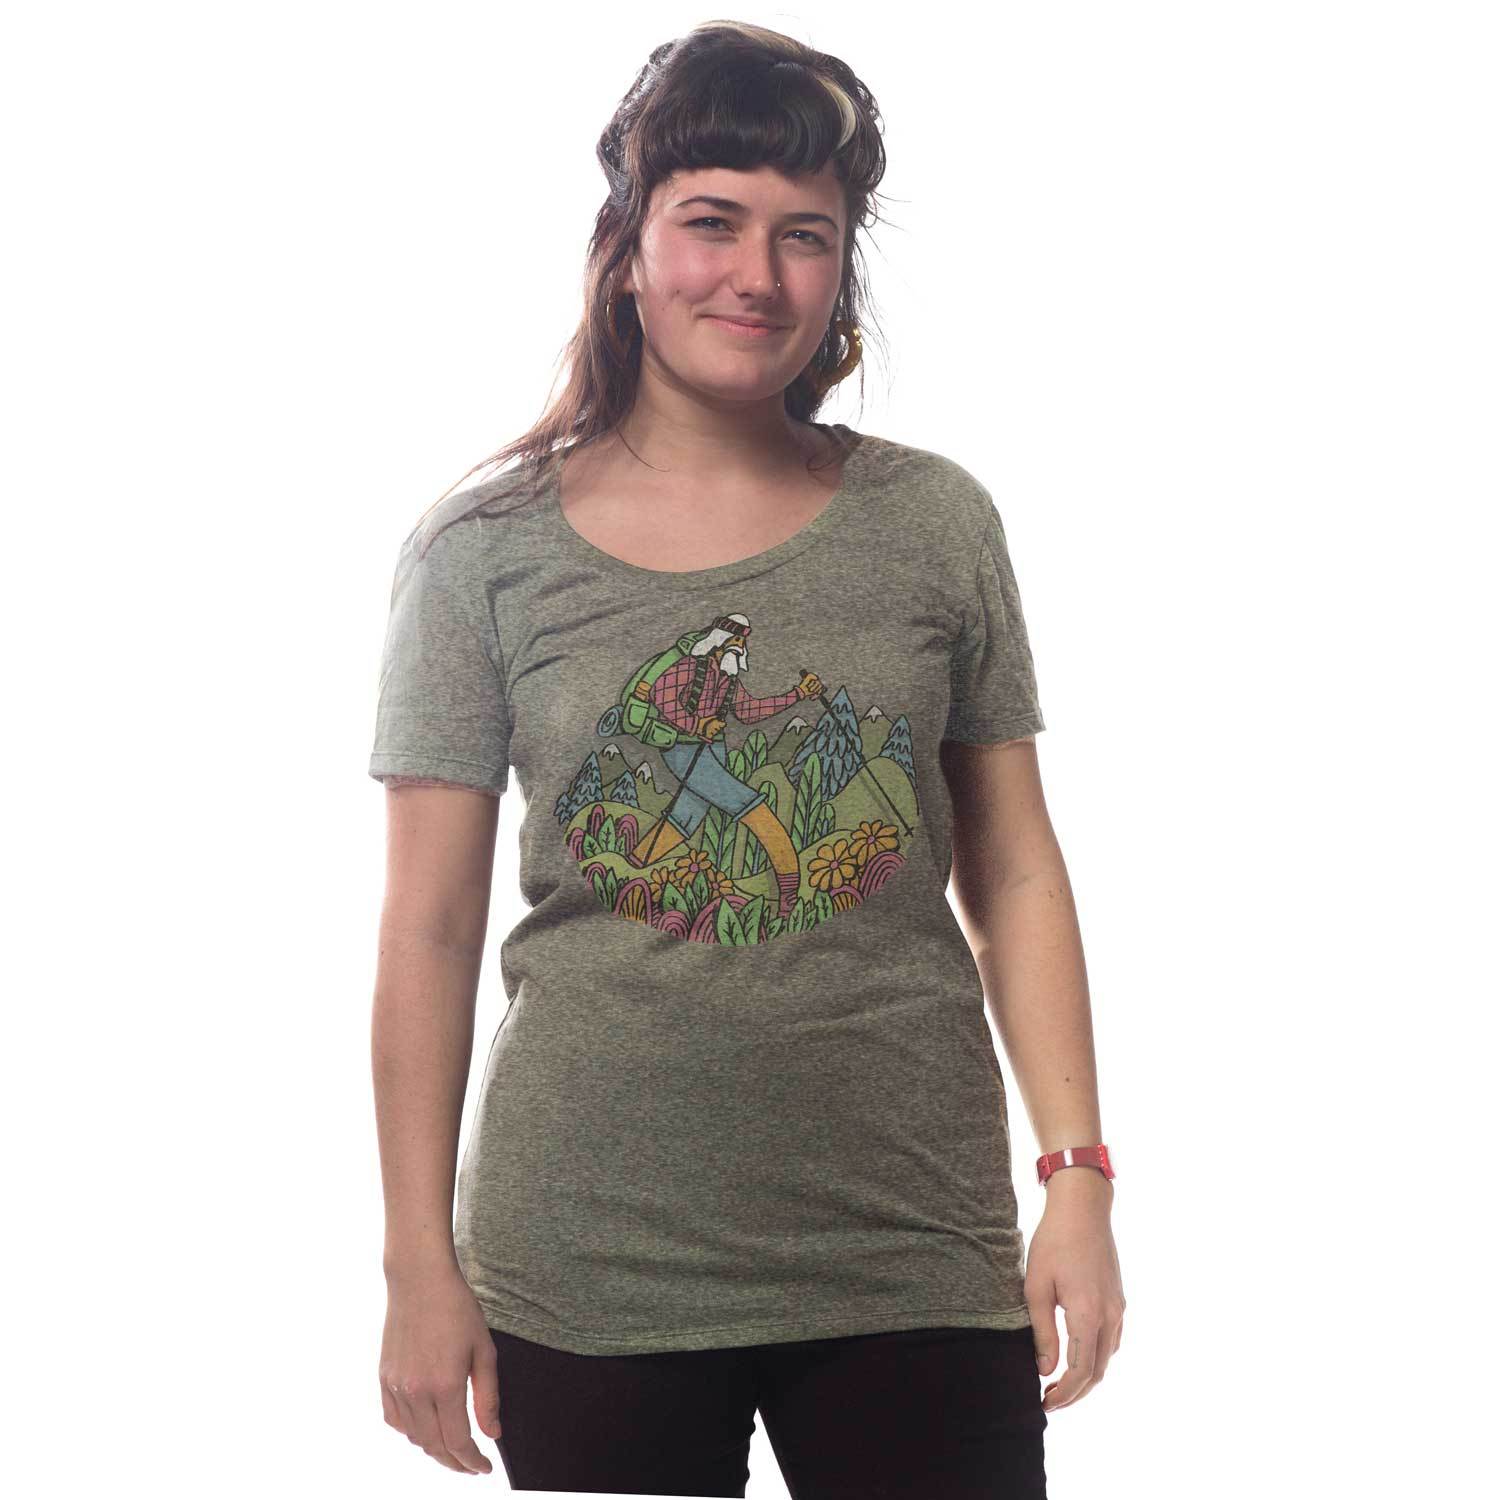 Women's Sunset T-shirt | Design by Dylan Fant